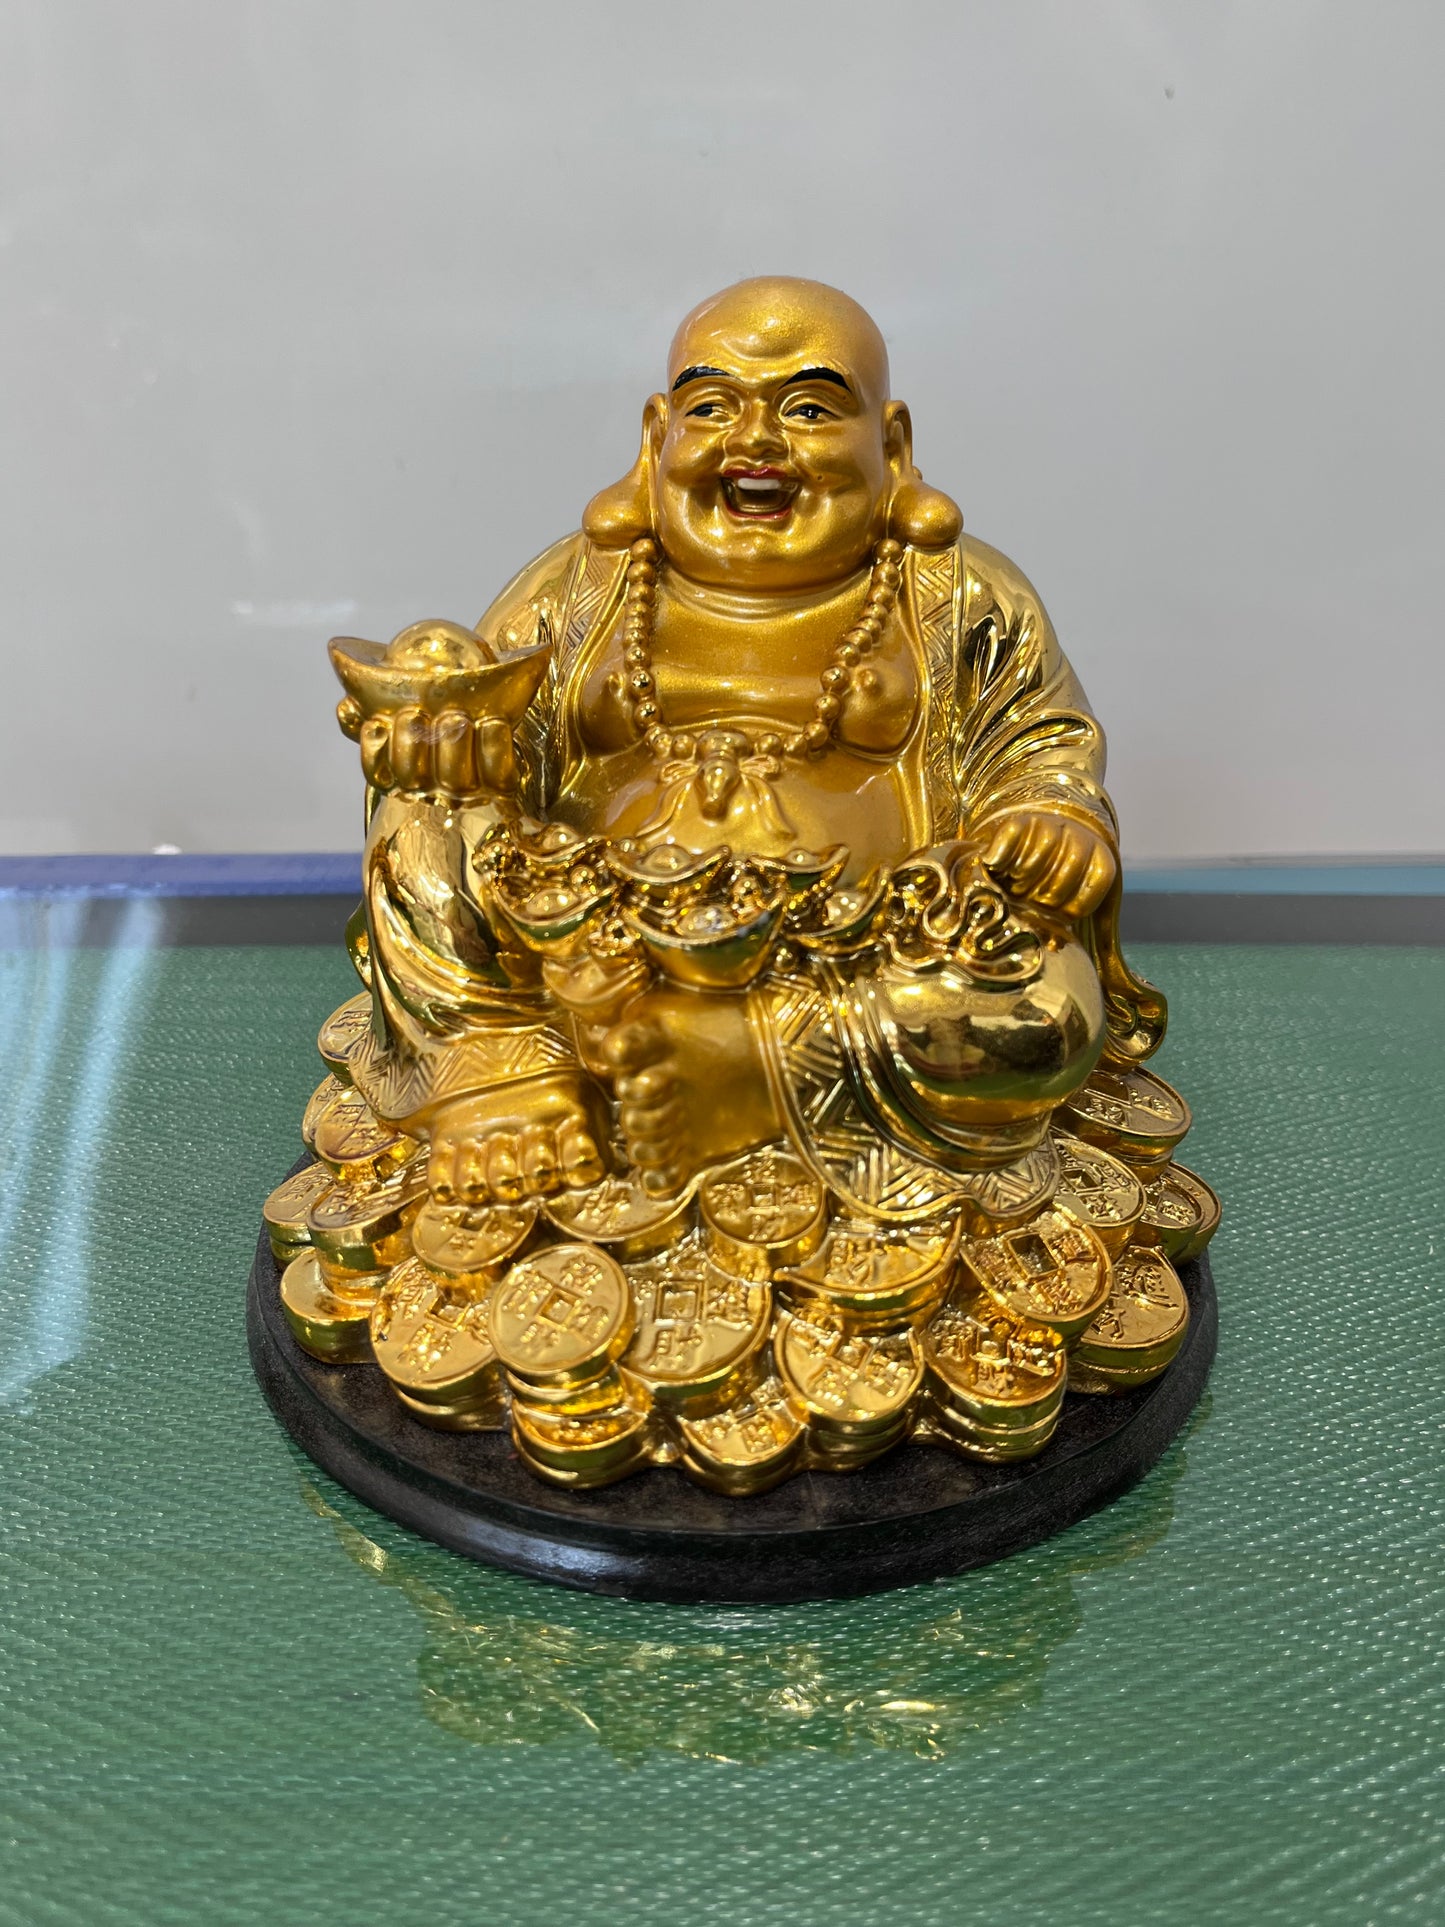 Golden Buddha with rich